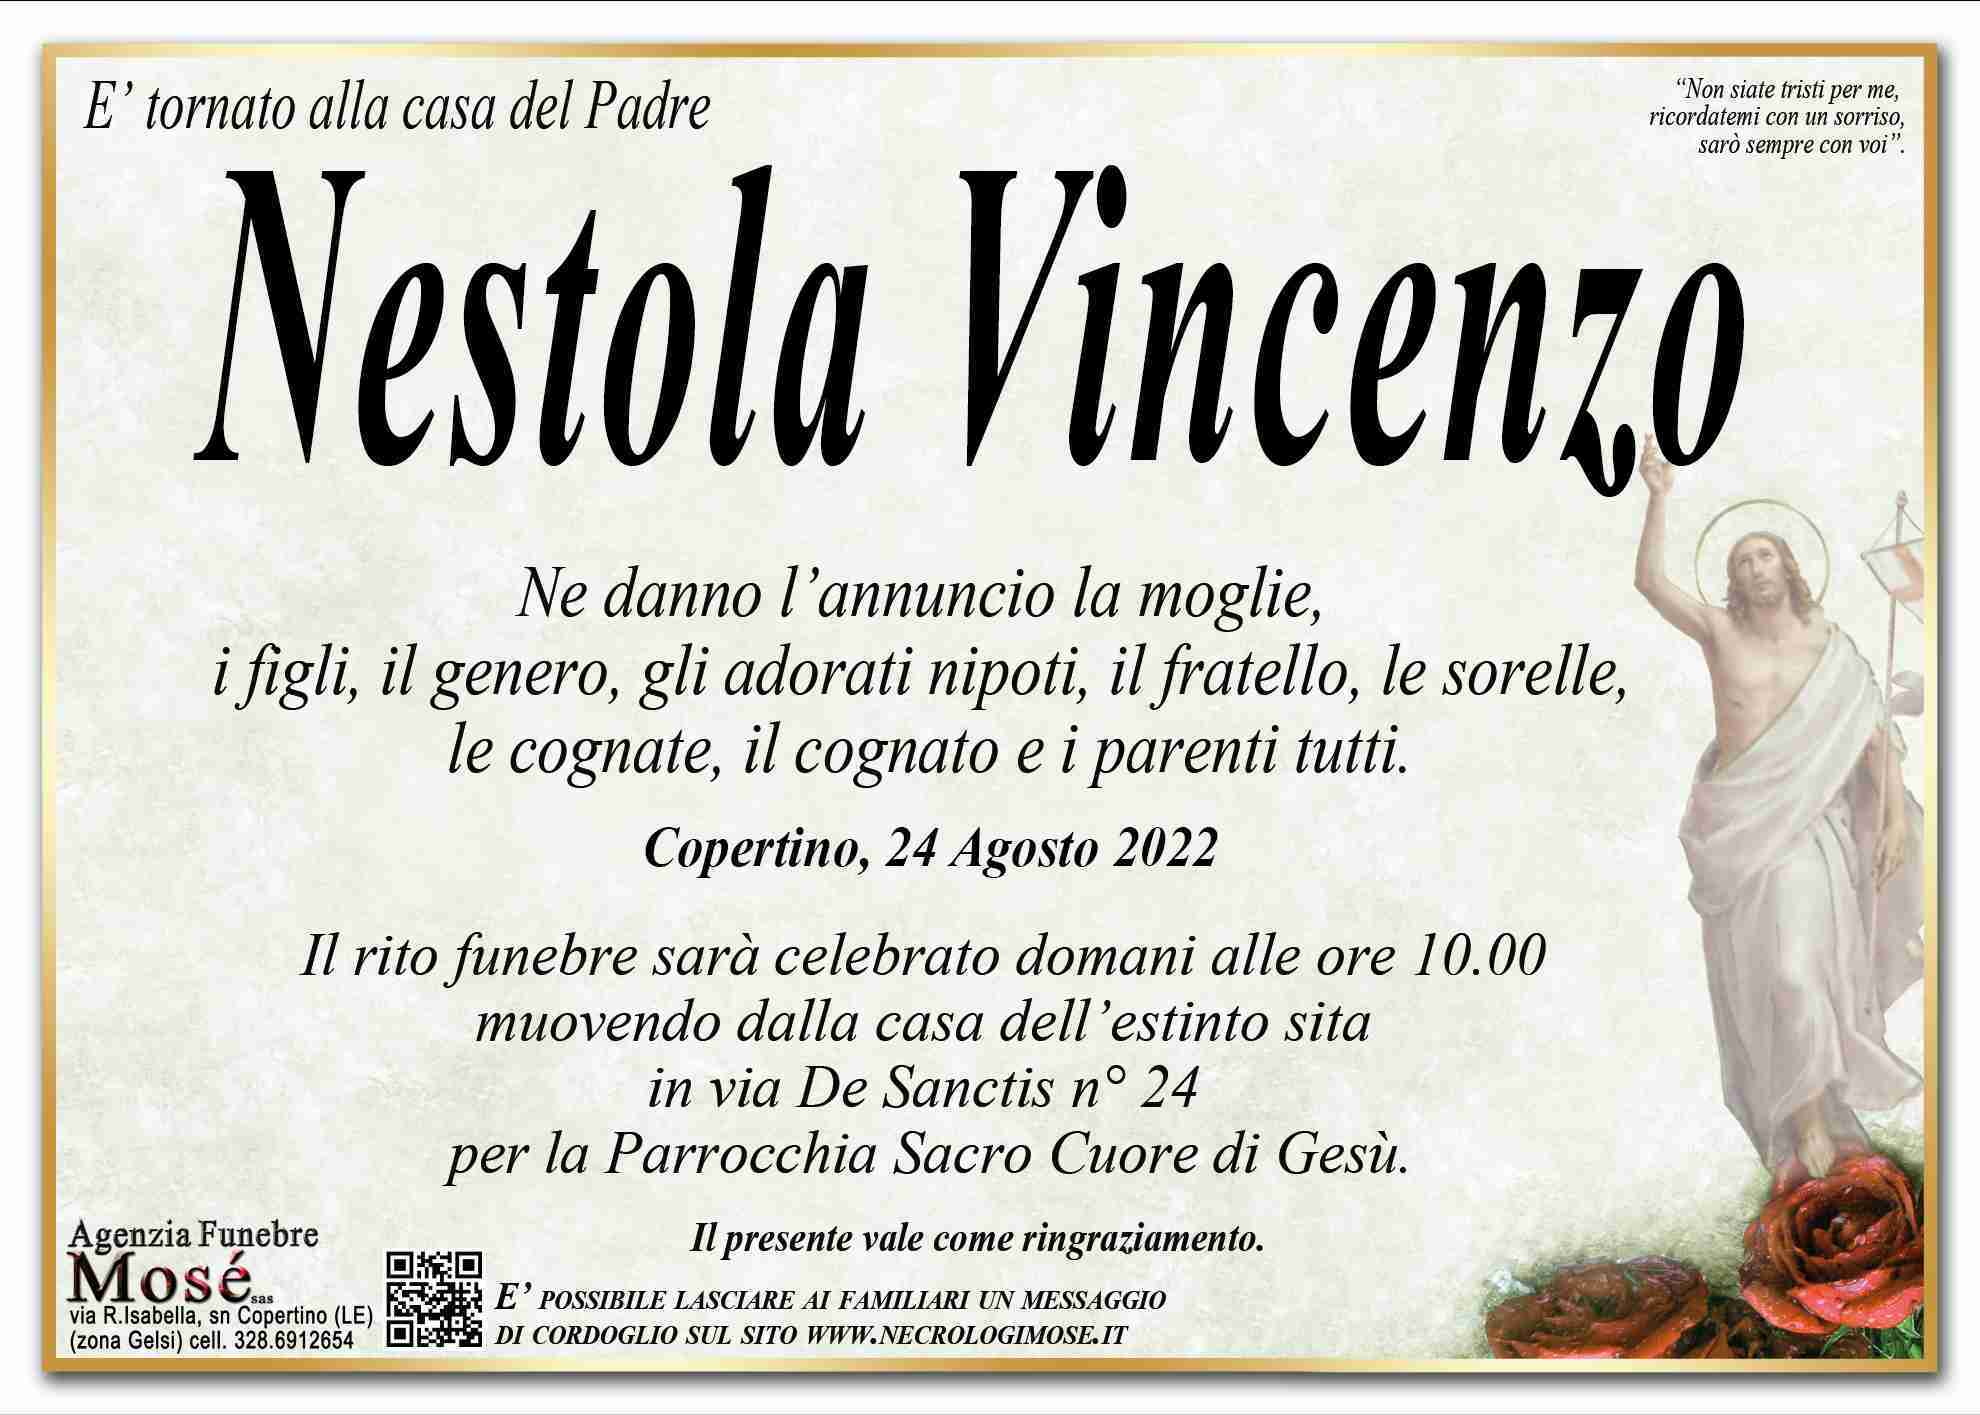 Vincenzo Nestola